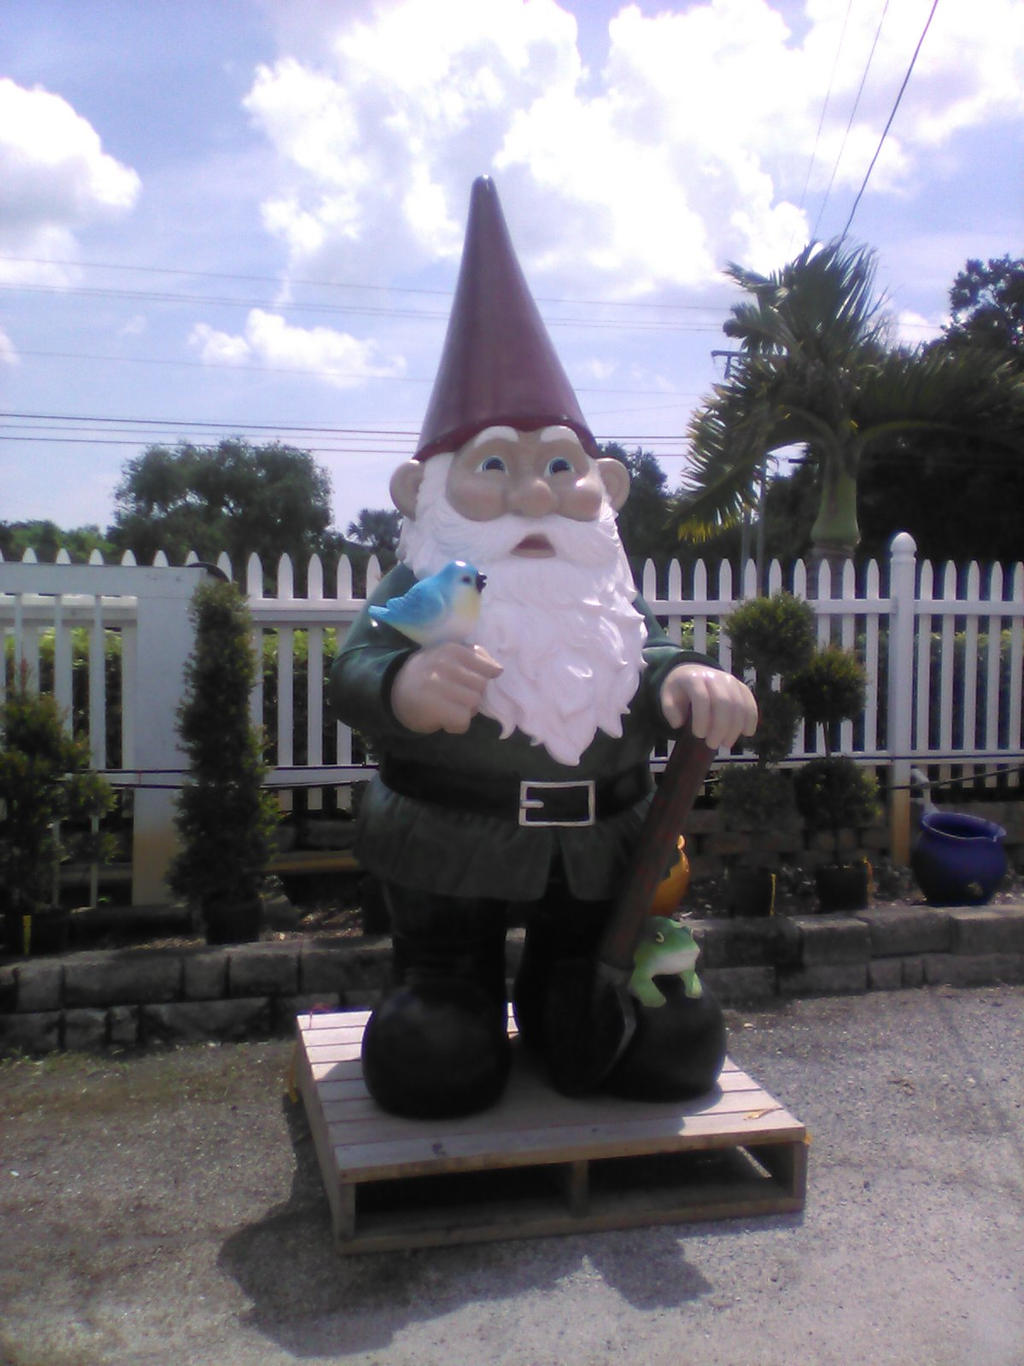 Giant Gnome By Trebornehoc On Deviantart